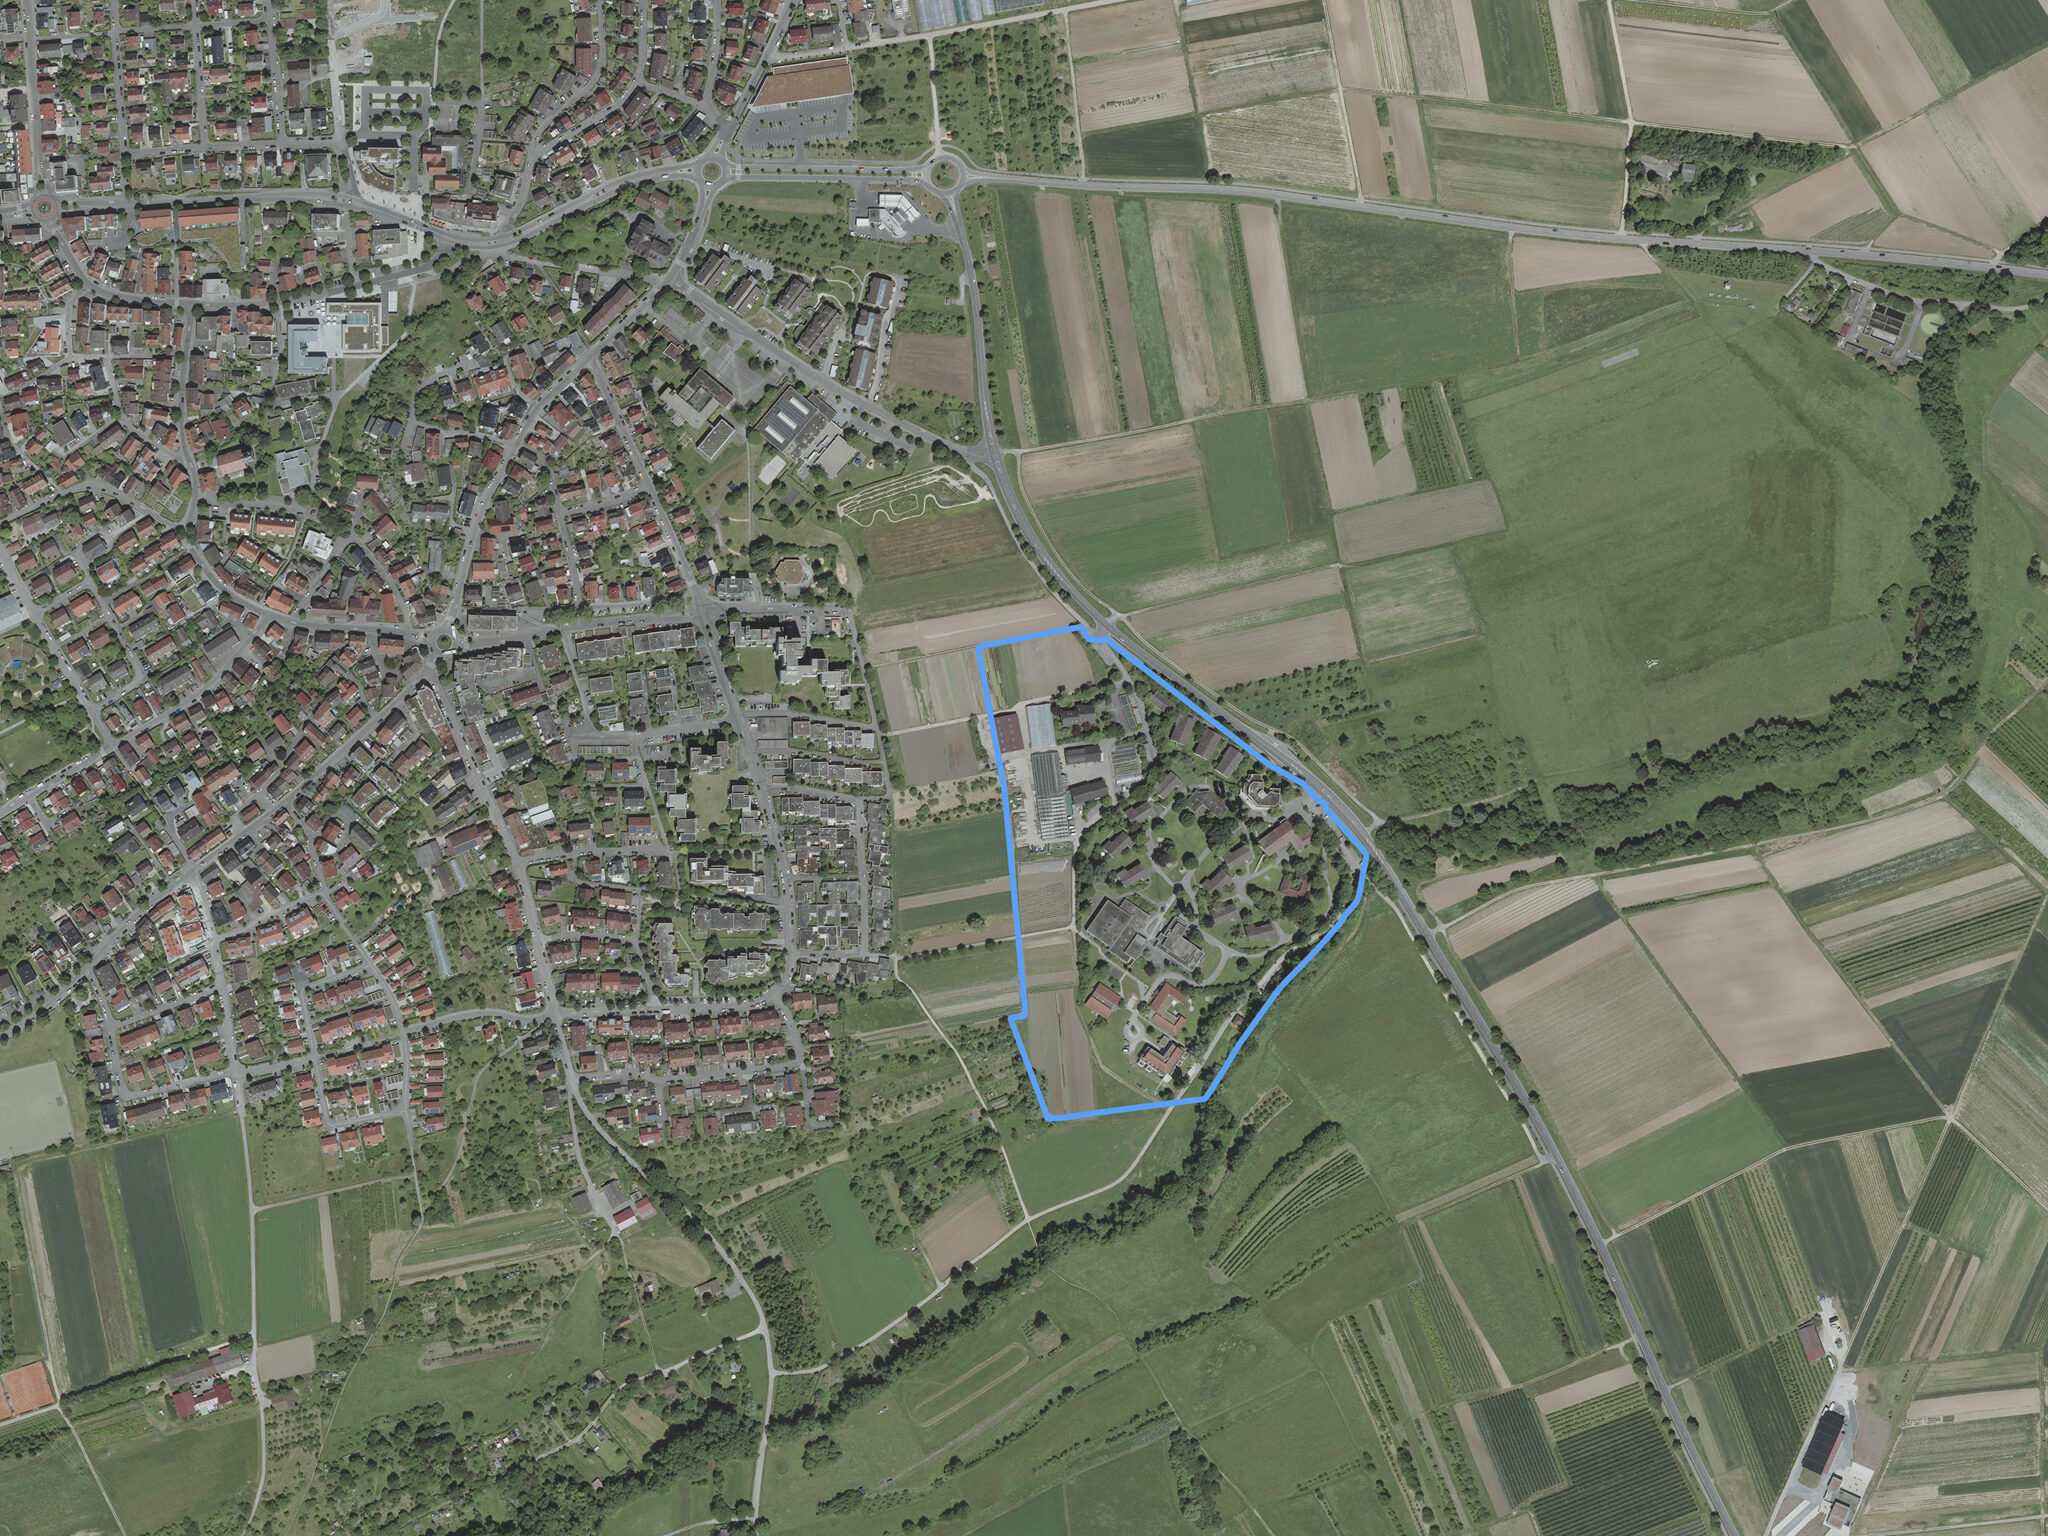 Aerial view of the project area. Credits: Geobasisdaten LGL, www.lgl-bw.de